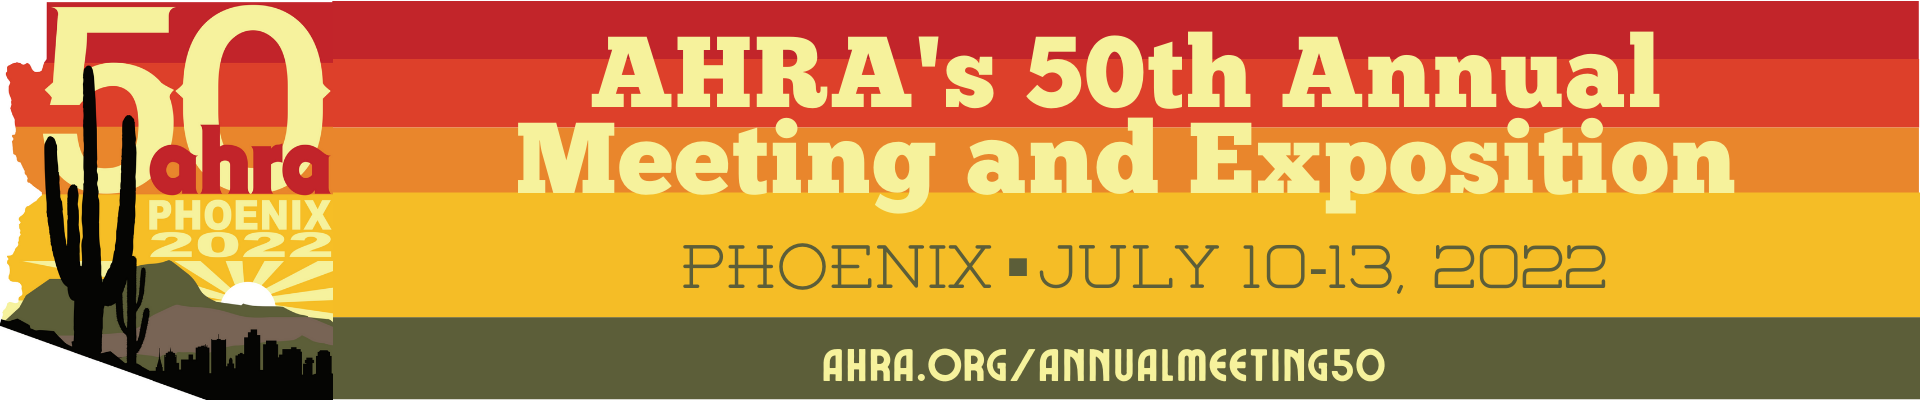 AHRA Annual Meeting